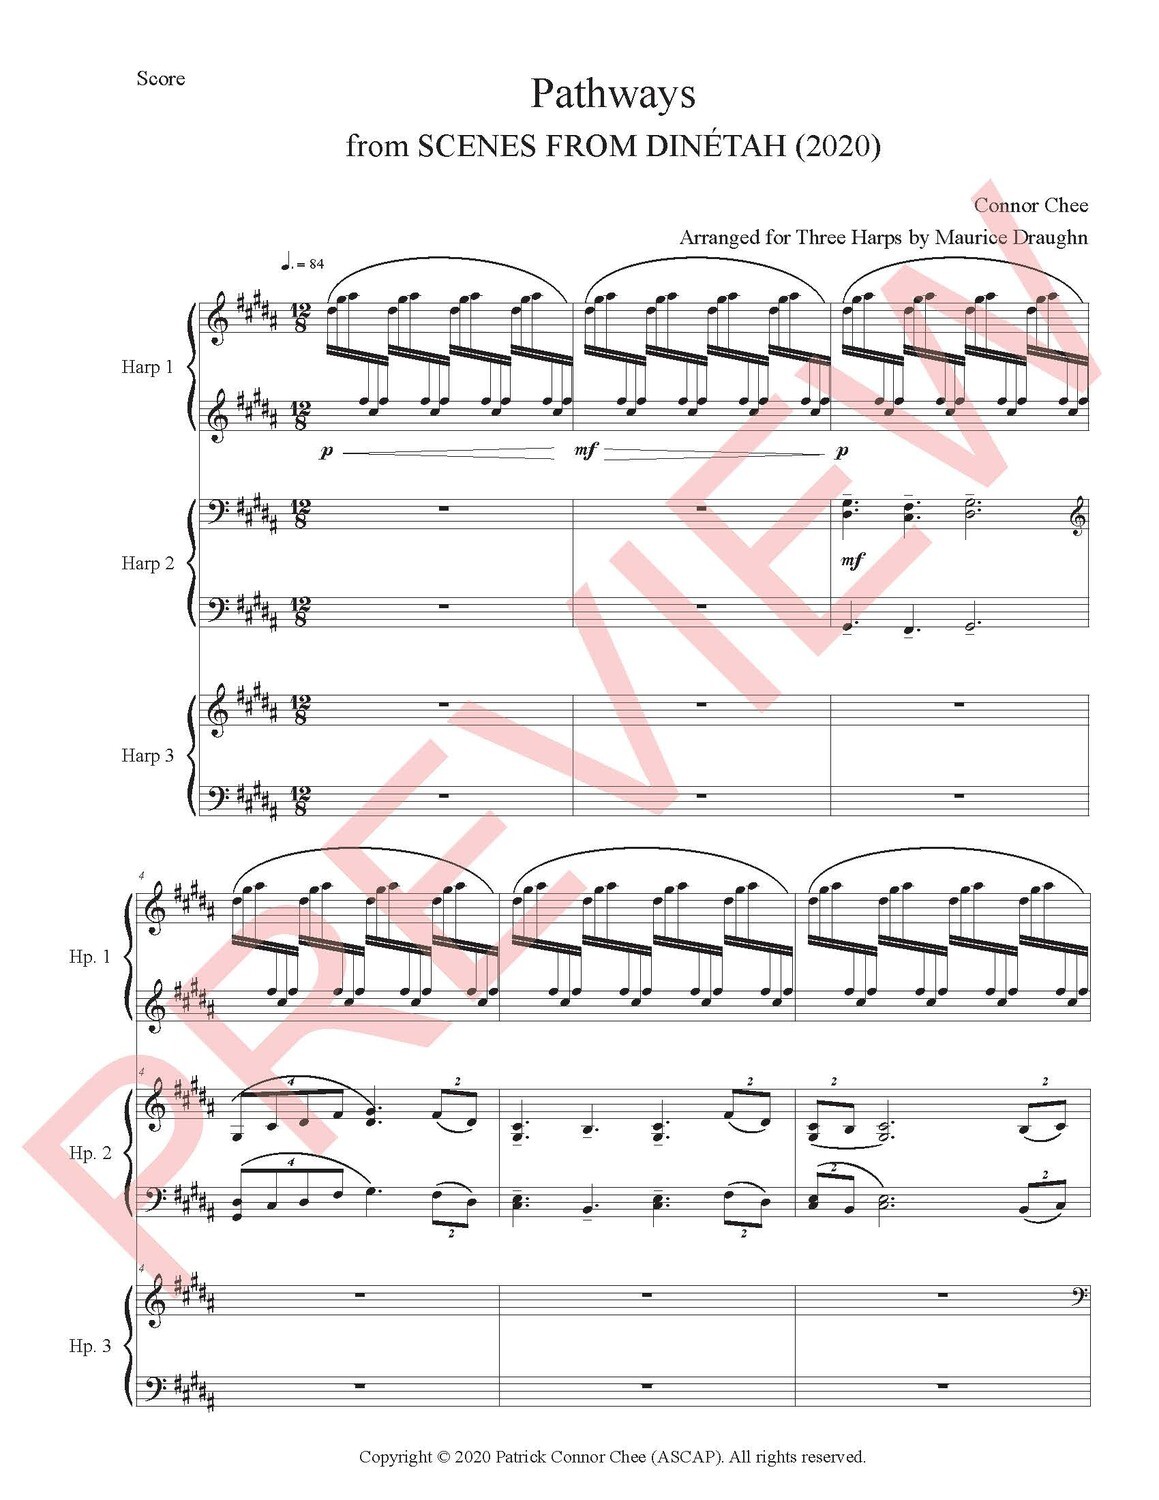 Digital Sheet Music - Arrangements Featuring Harp (Connor Chee)